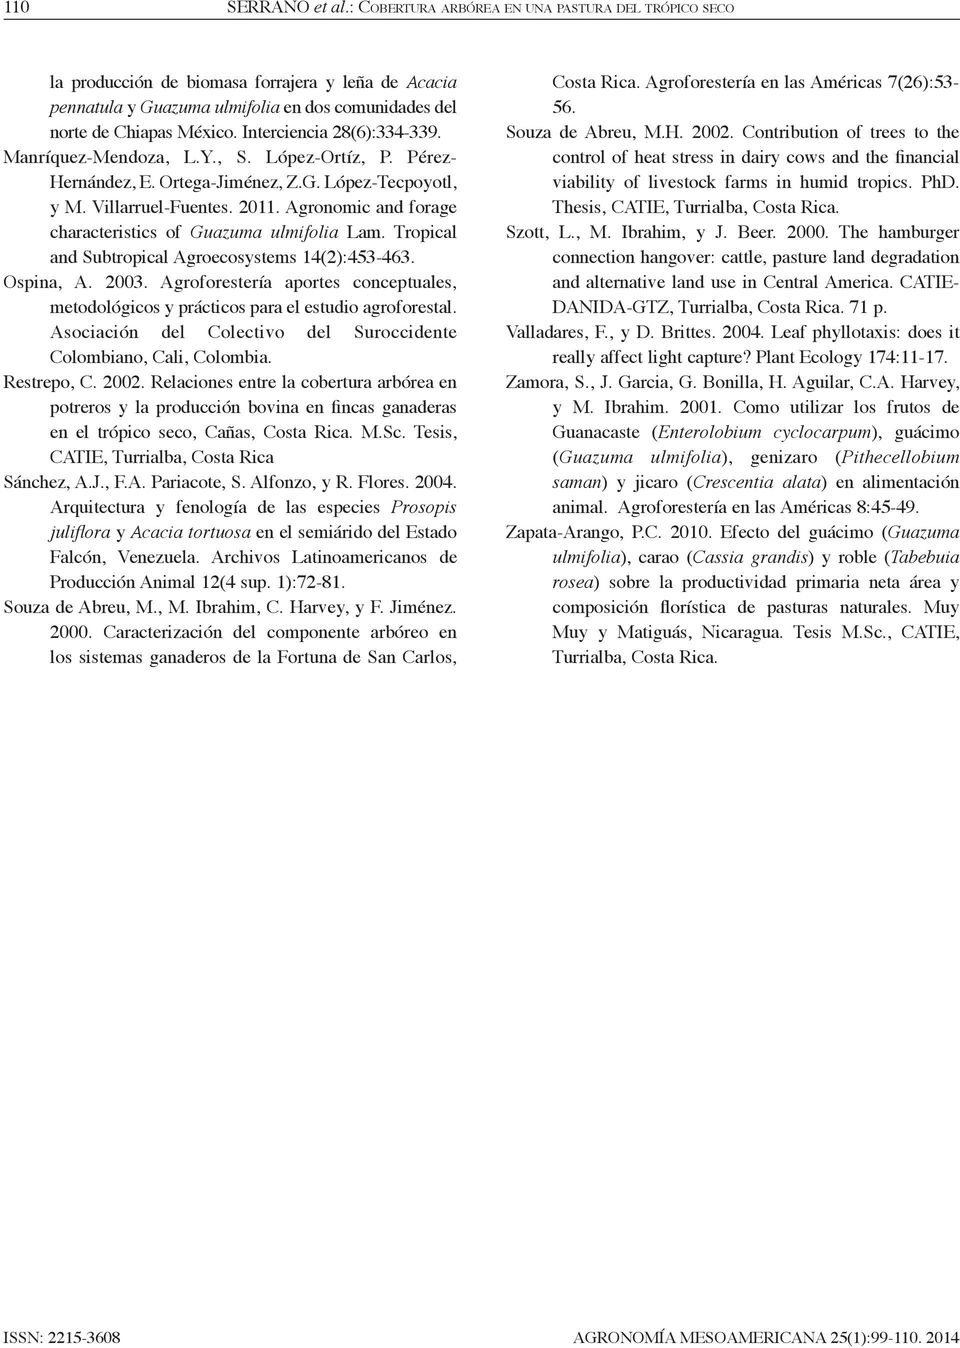 Agronomic and forage characteristics of Guazuma ulmifolia Lam. Tropical and Subtropical Agroecosystems 14(2):453-463. Ospina, A. 2003.